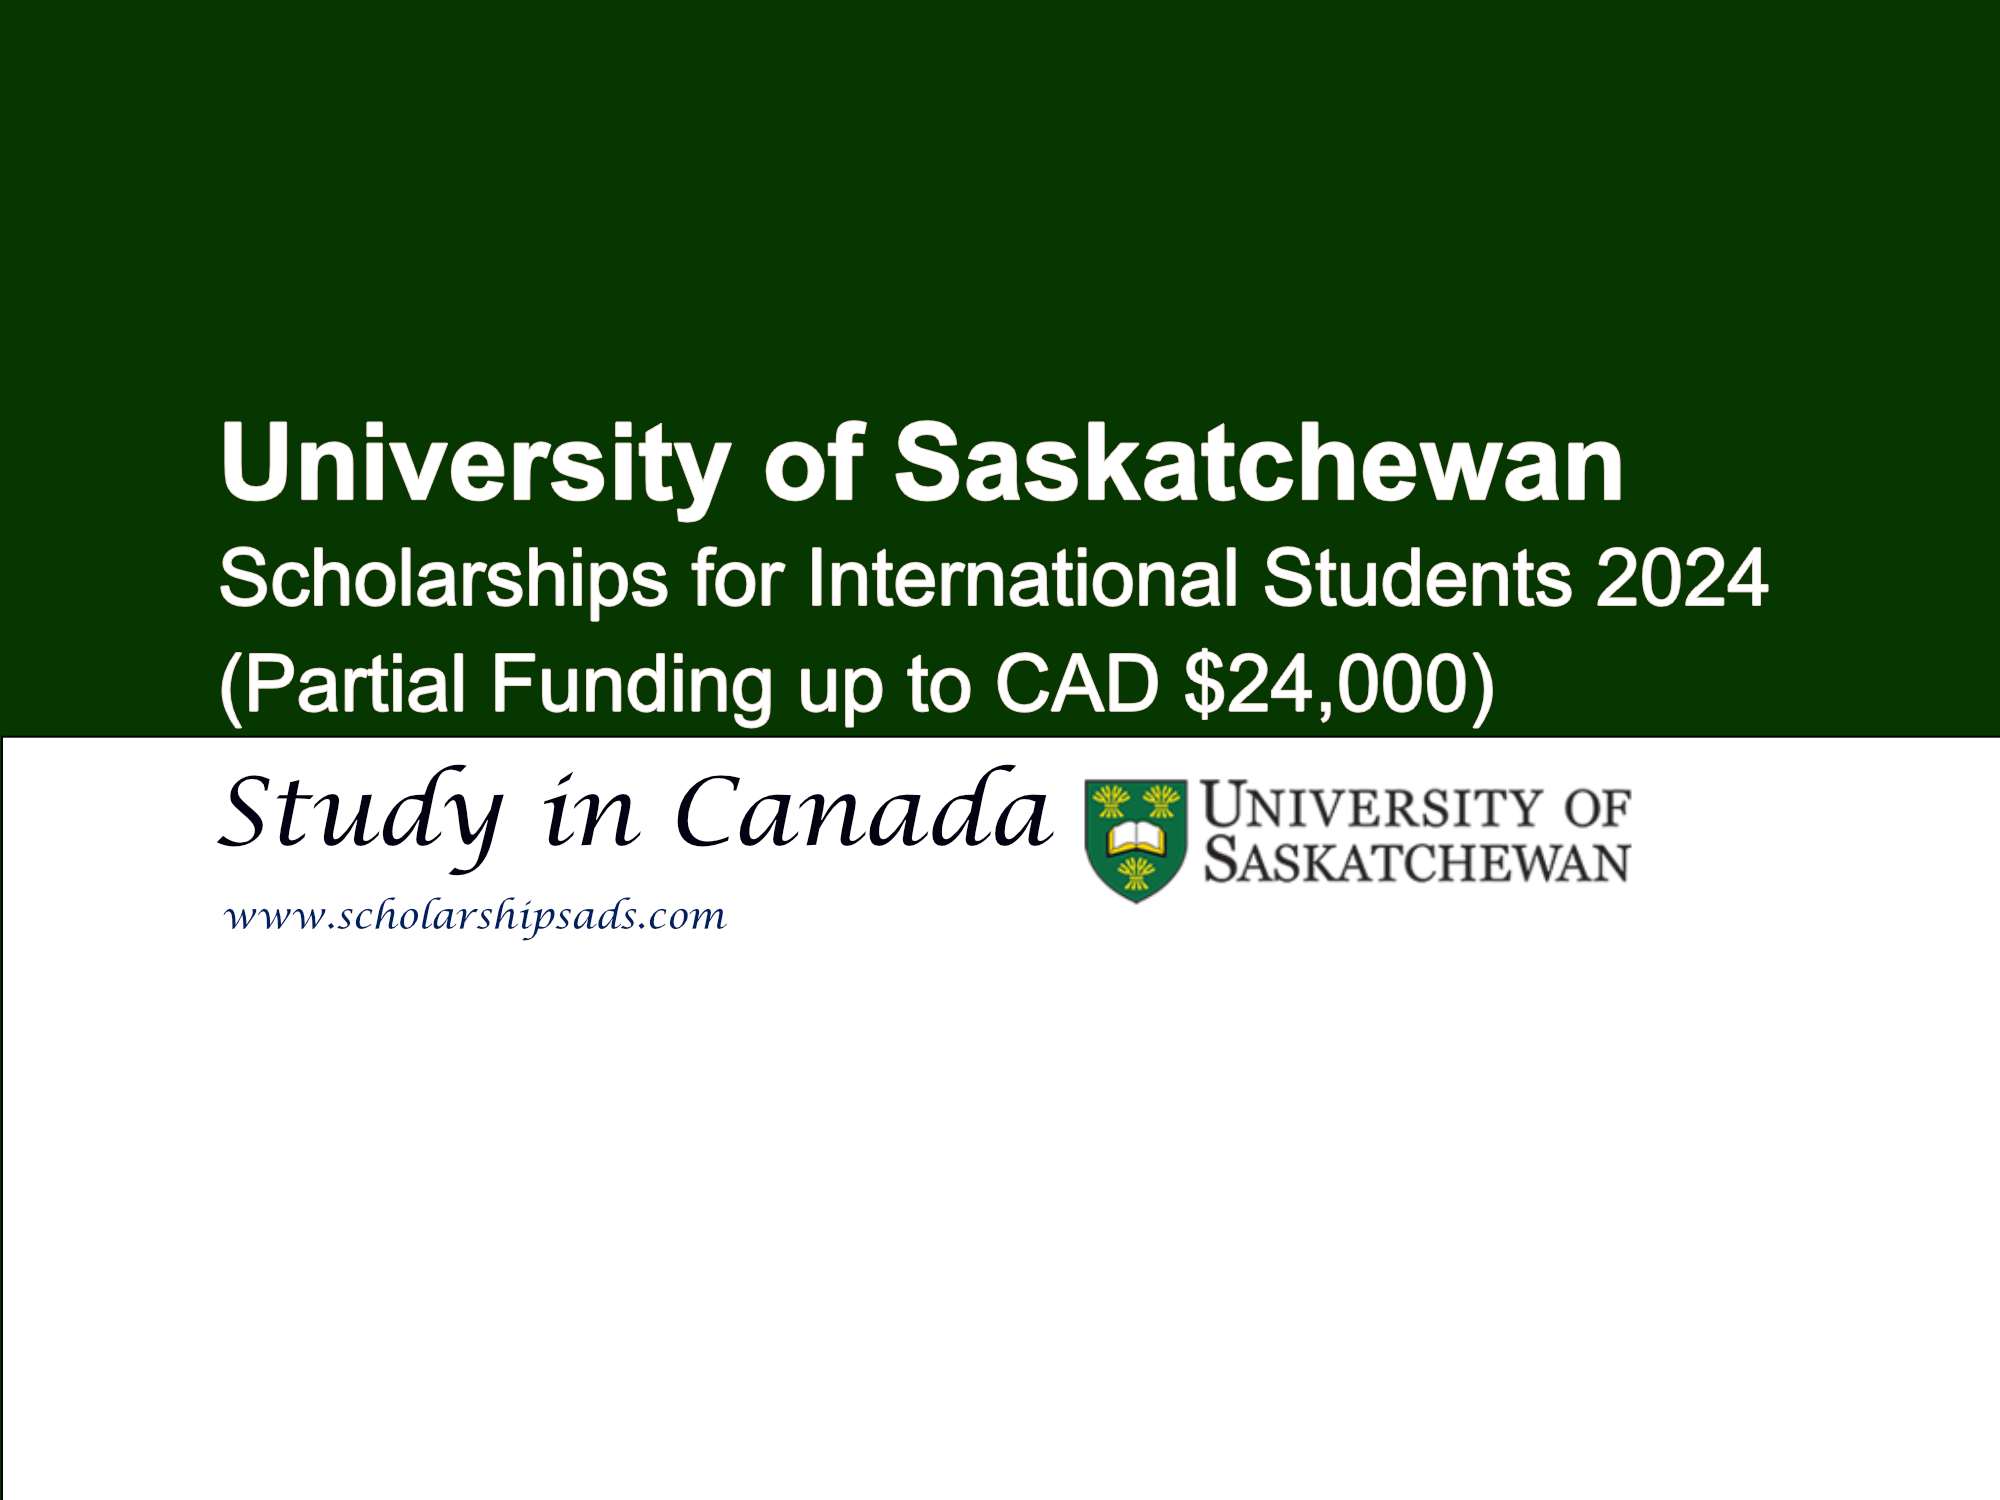 University of Saskatchewan Scholarships 2024 for International Students, Canada.